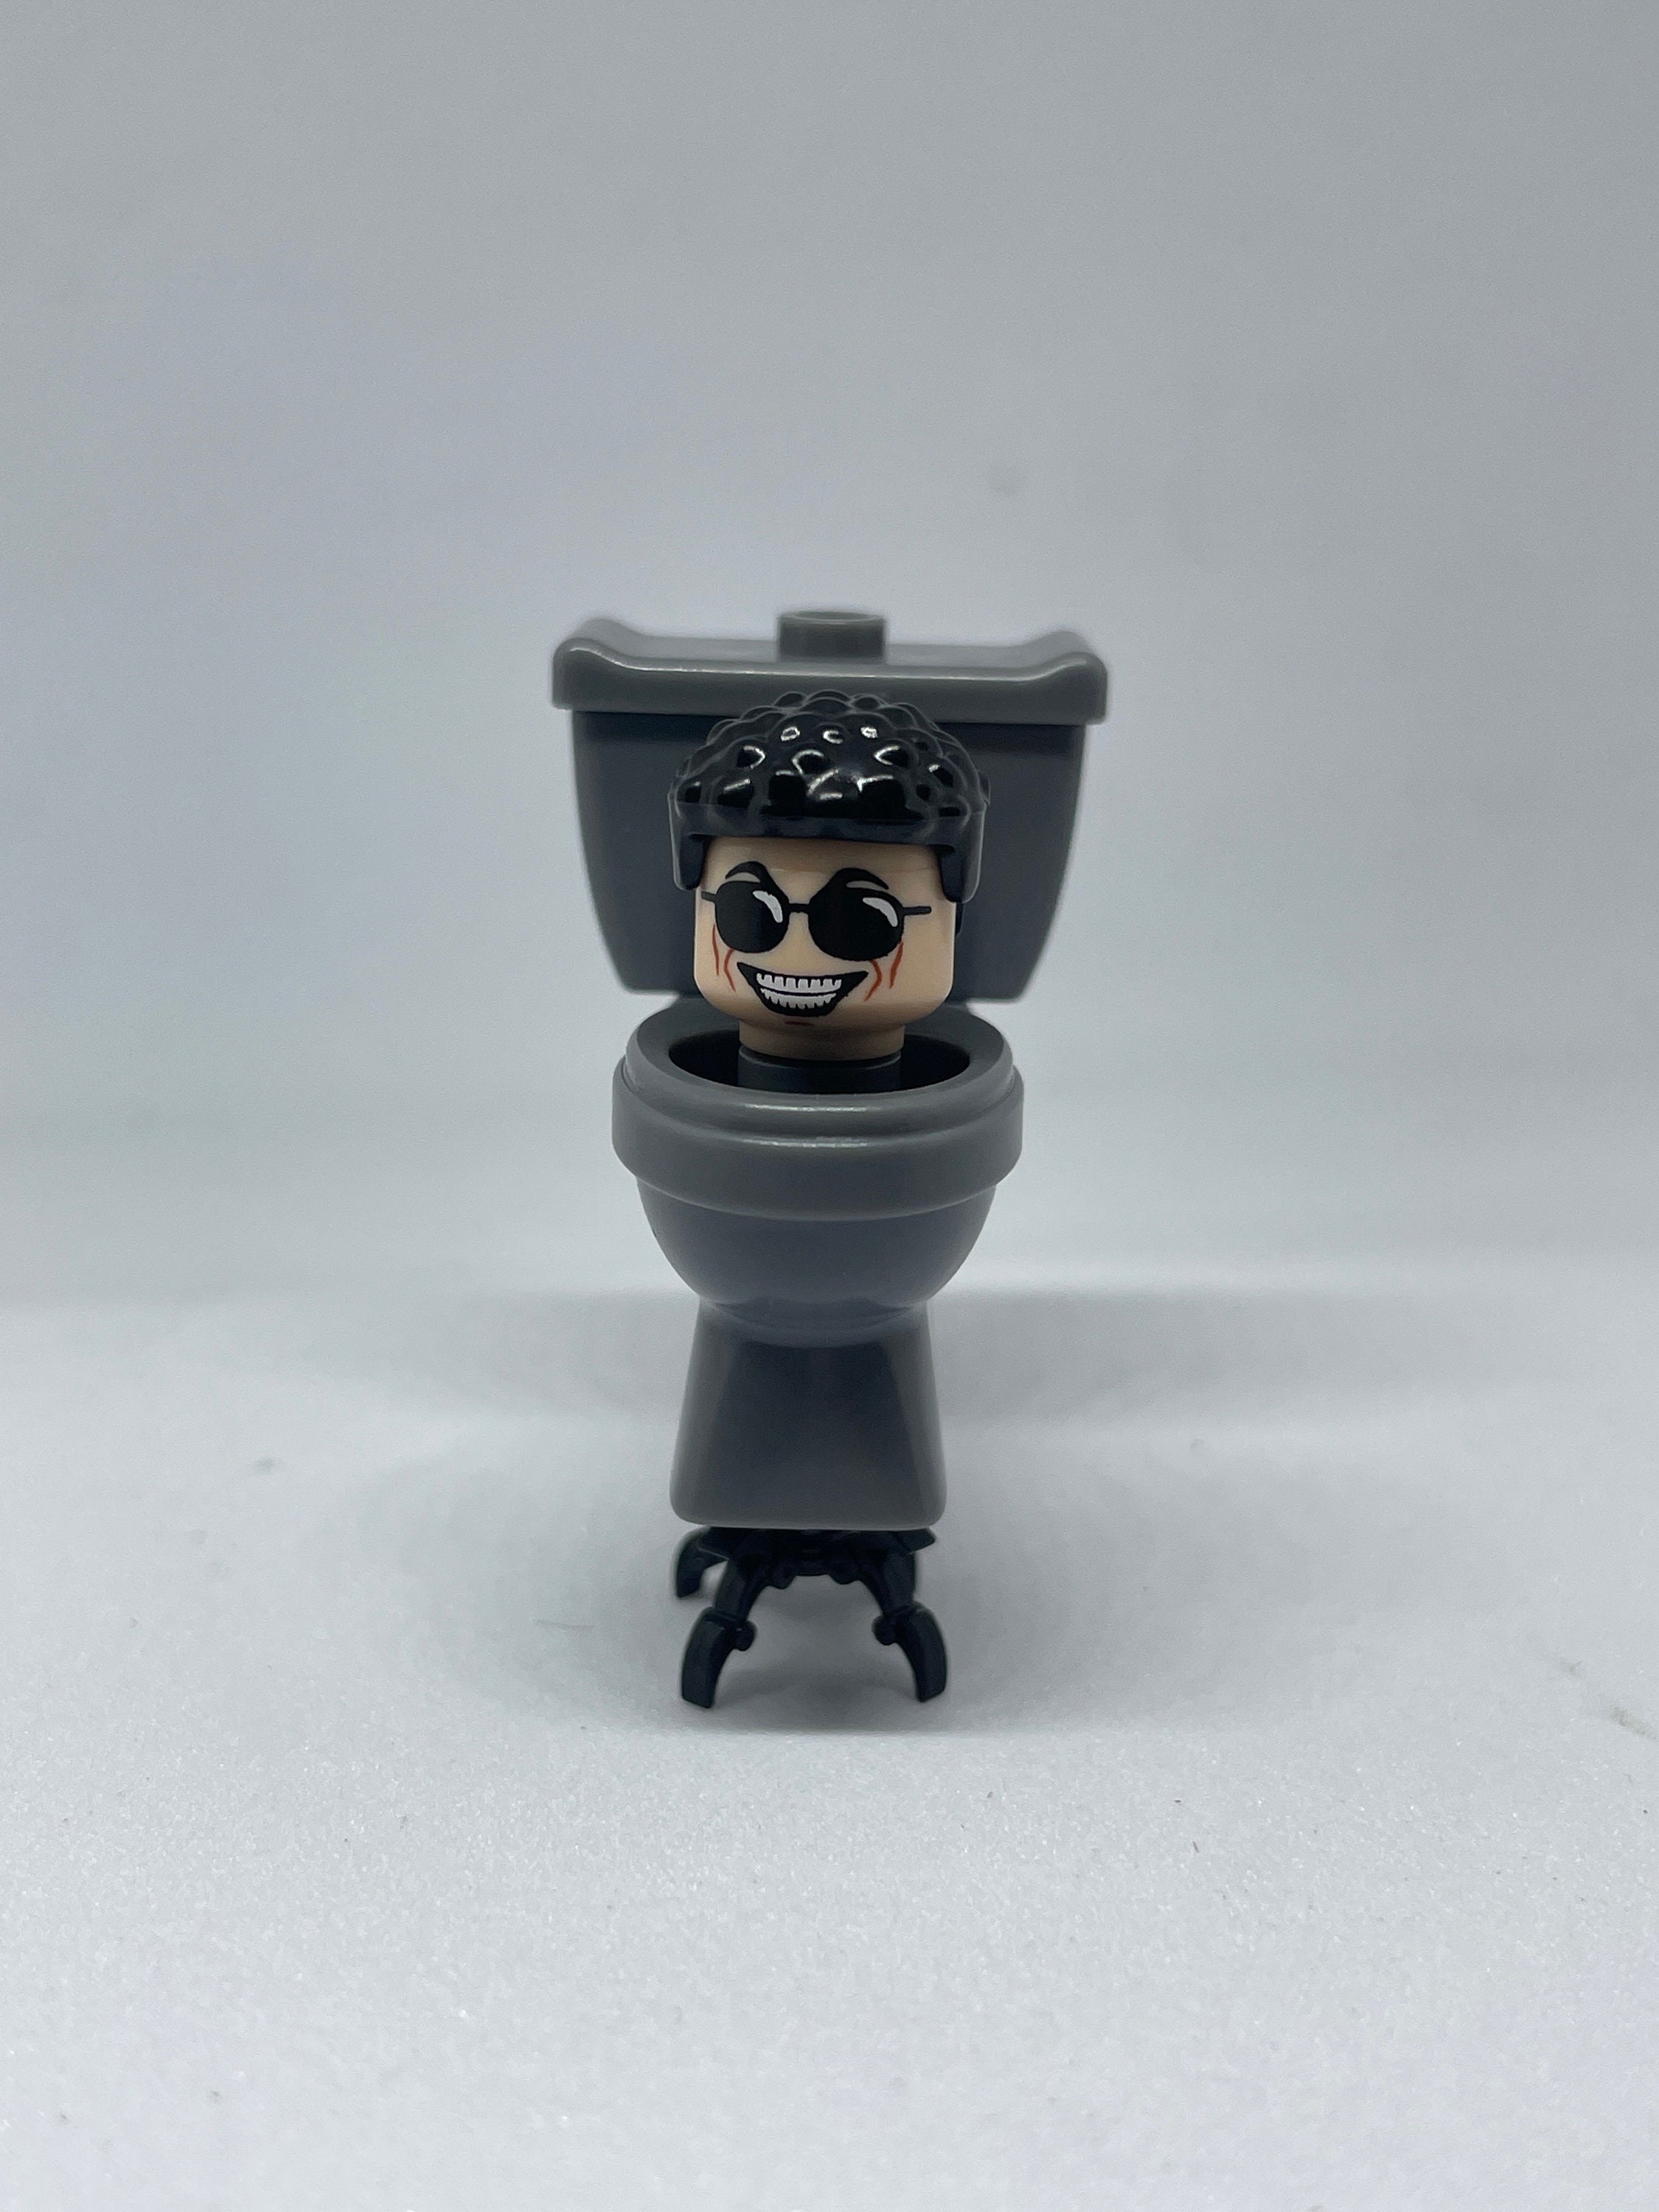 Skibidi Toilet Man Custom Minifigs fit Lego K2140